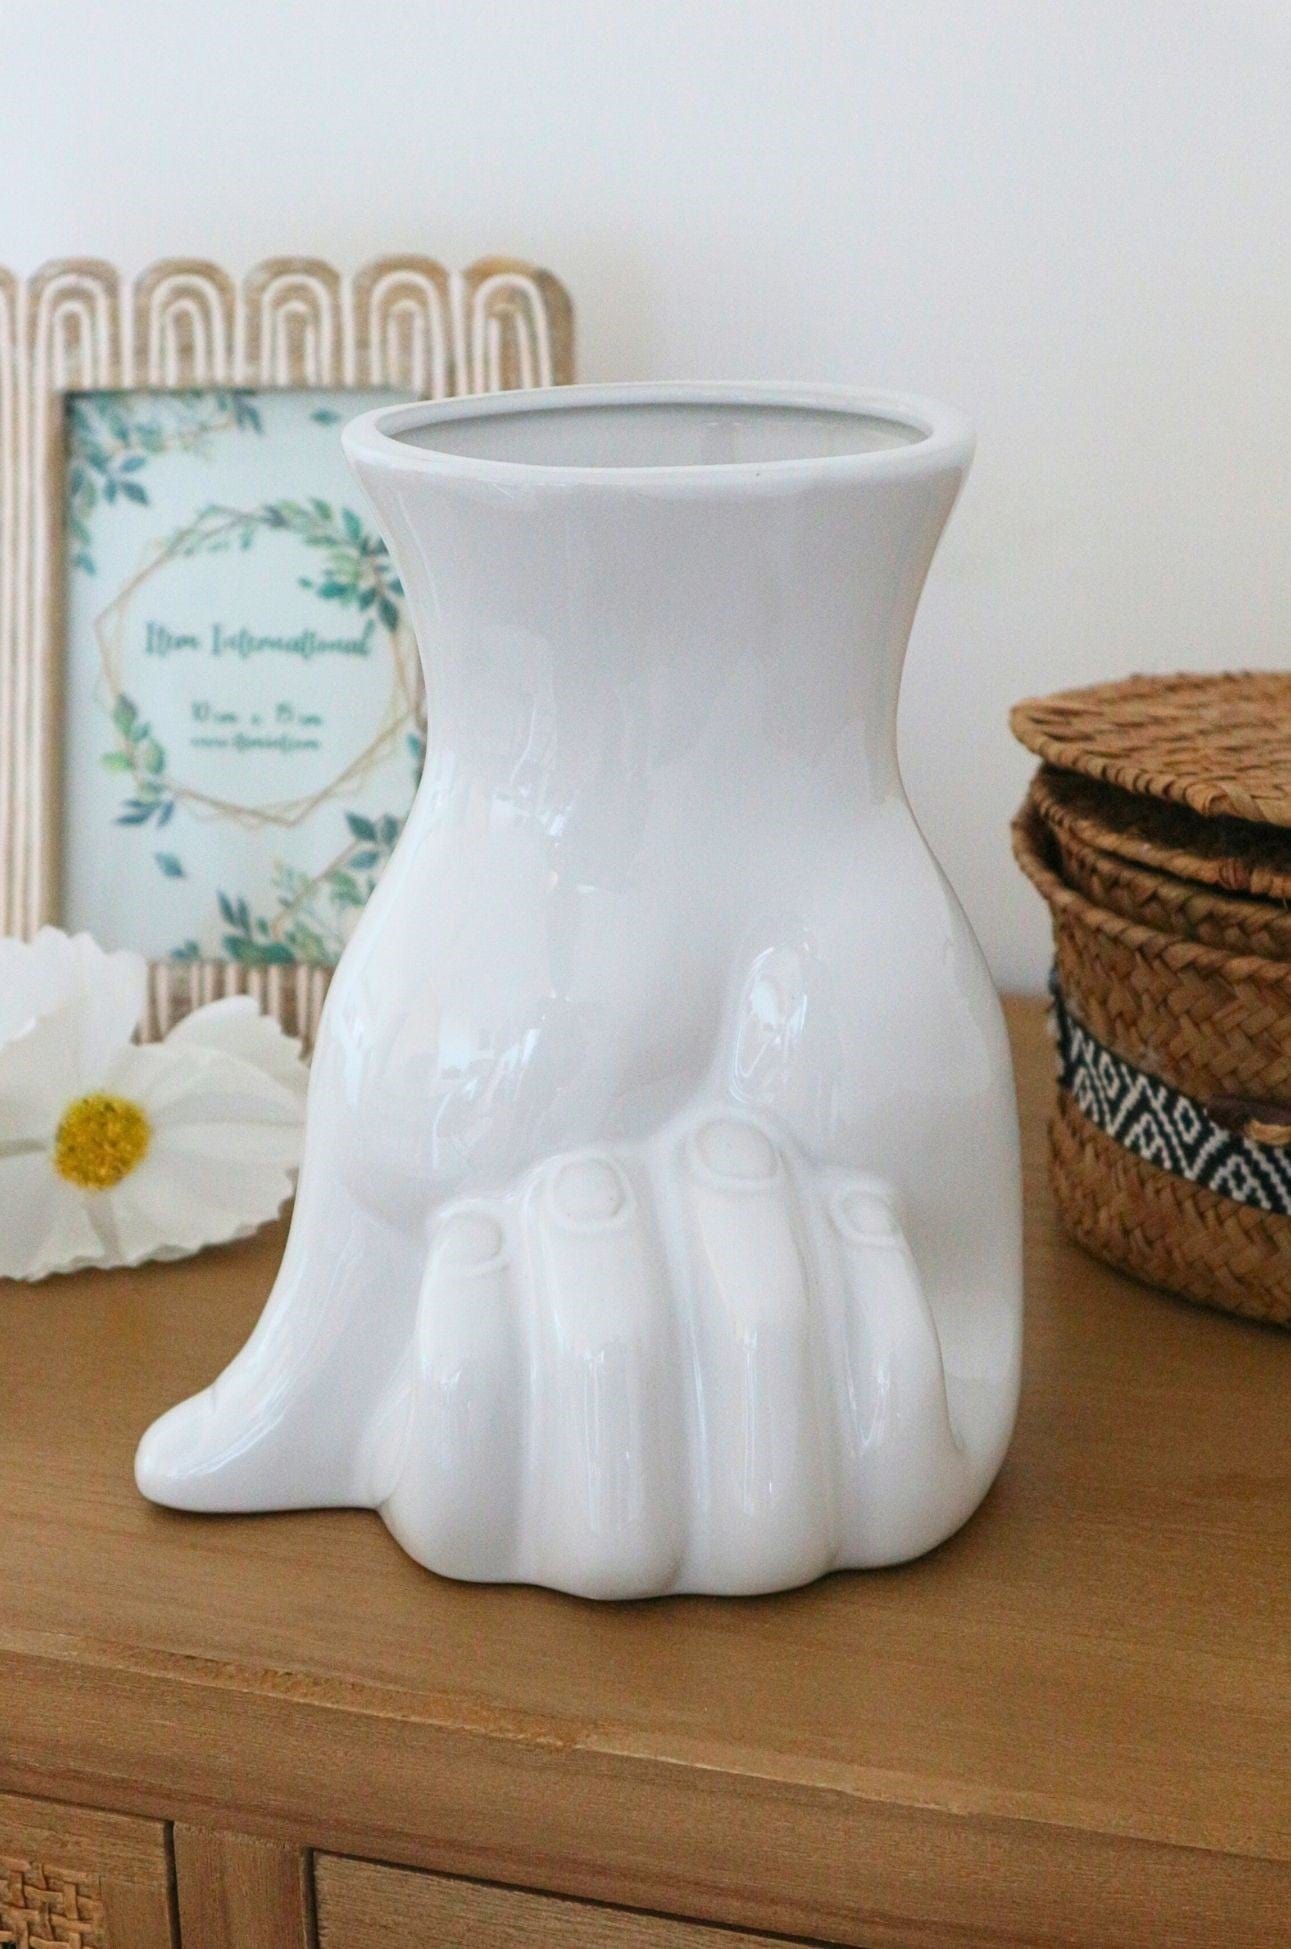 Item International Ira Ira - Vaso in ceramica bianca a forma di mano | Item International